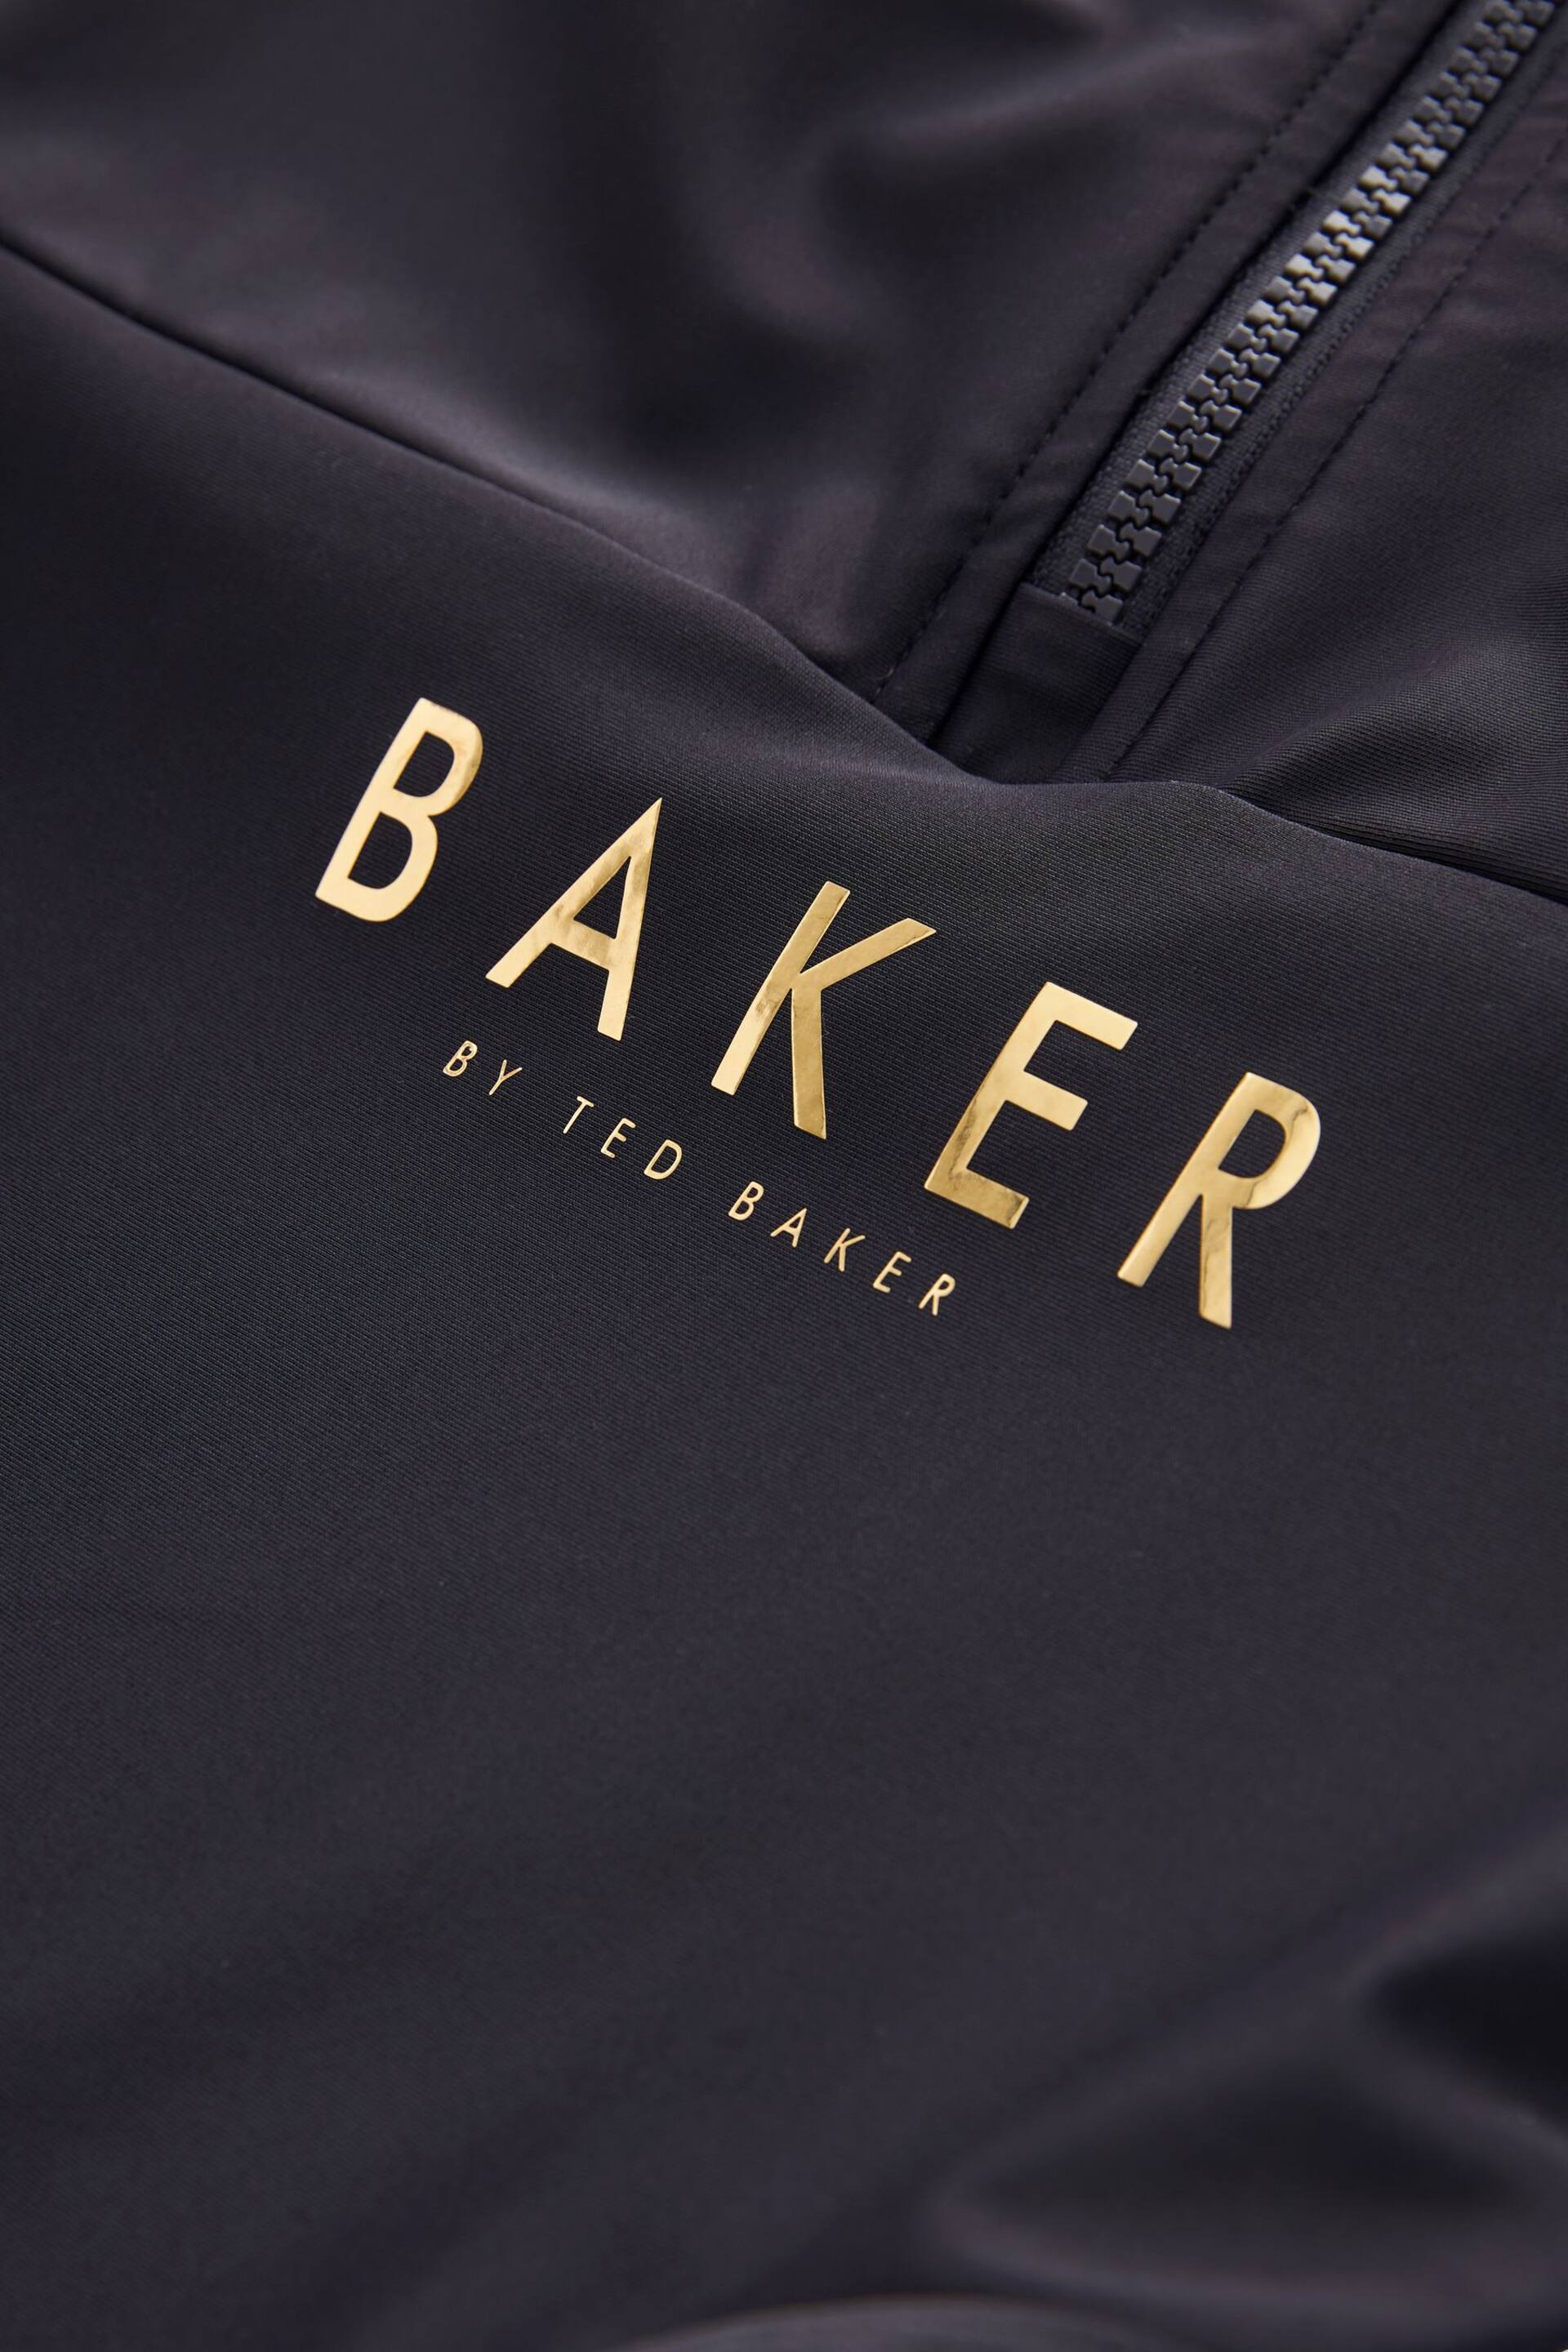 Baker by Ted Baker Navy Zip Swimsuit - Image 4 of 5